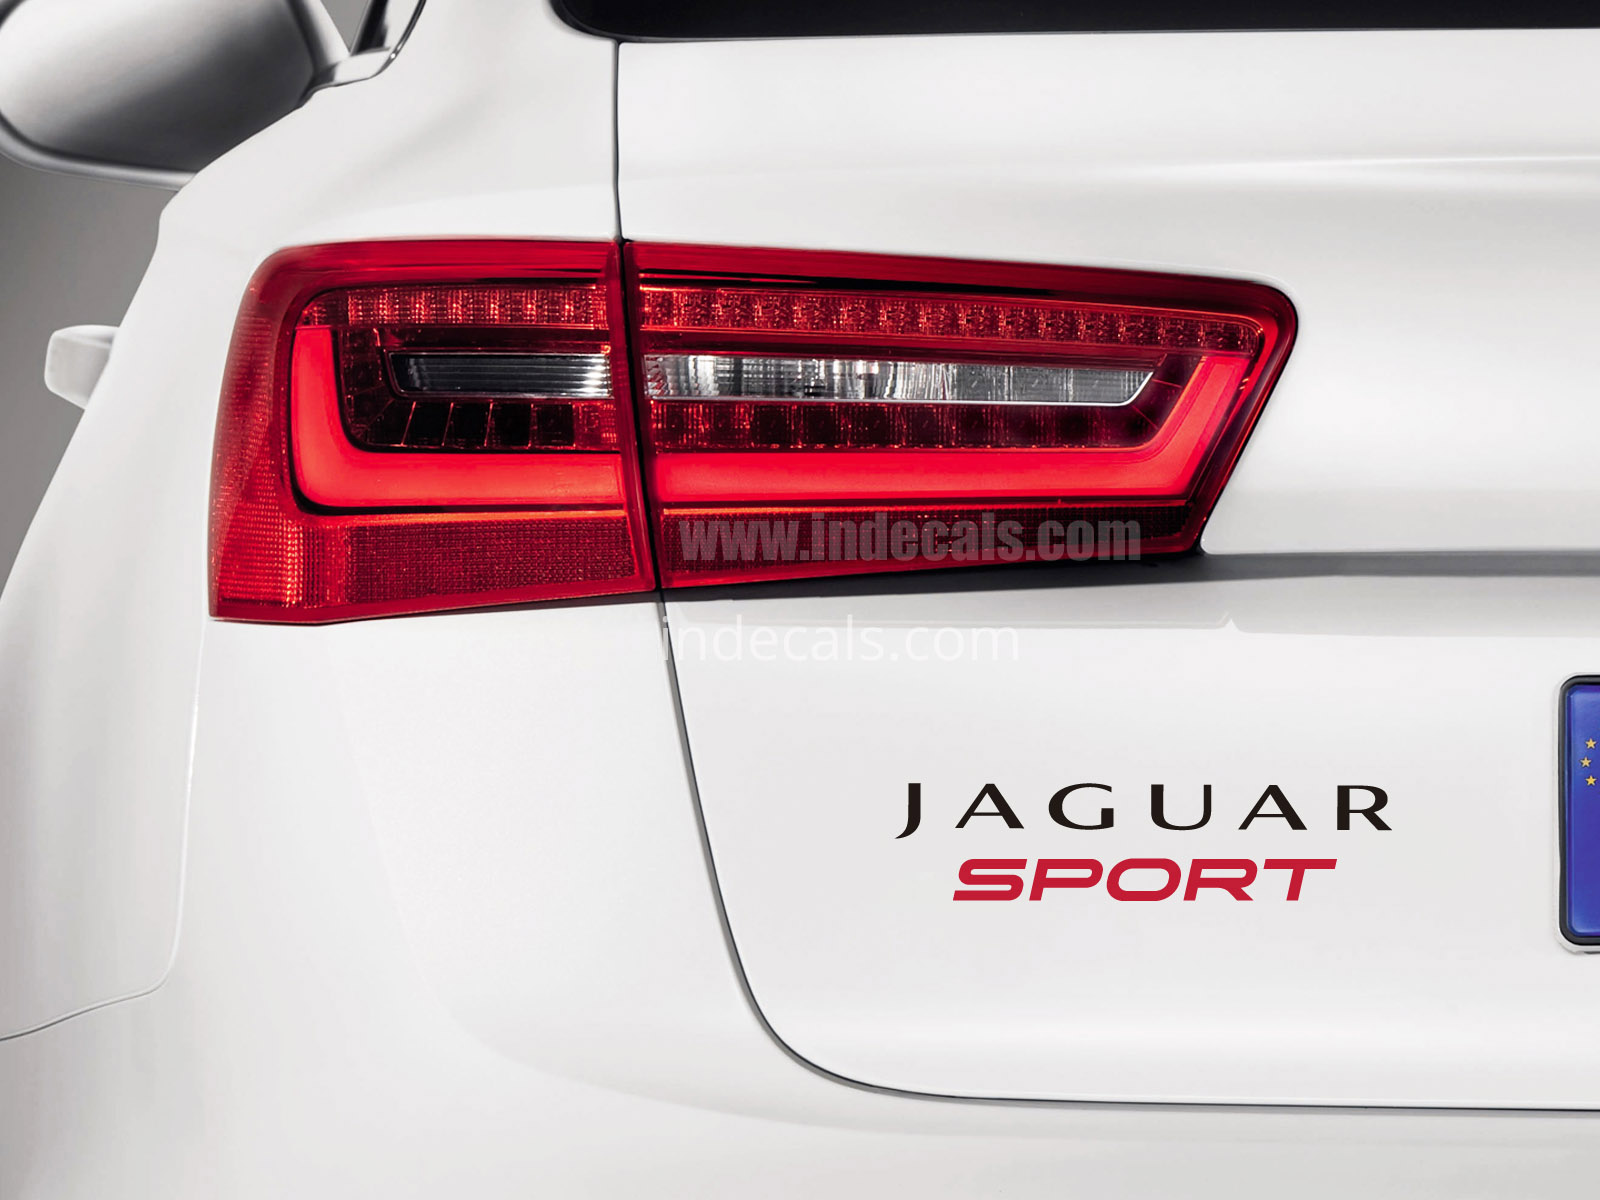 1 x Jaguar Sports Sticker for Trunk - Black & Red